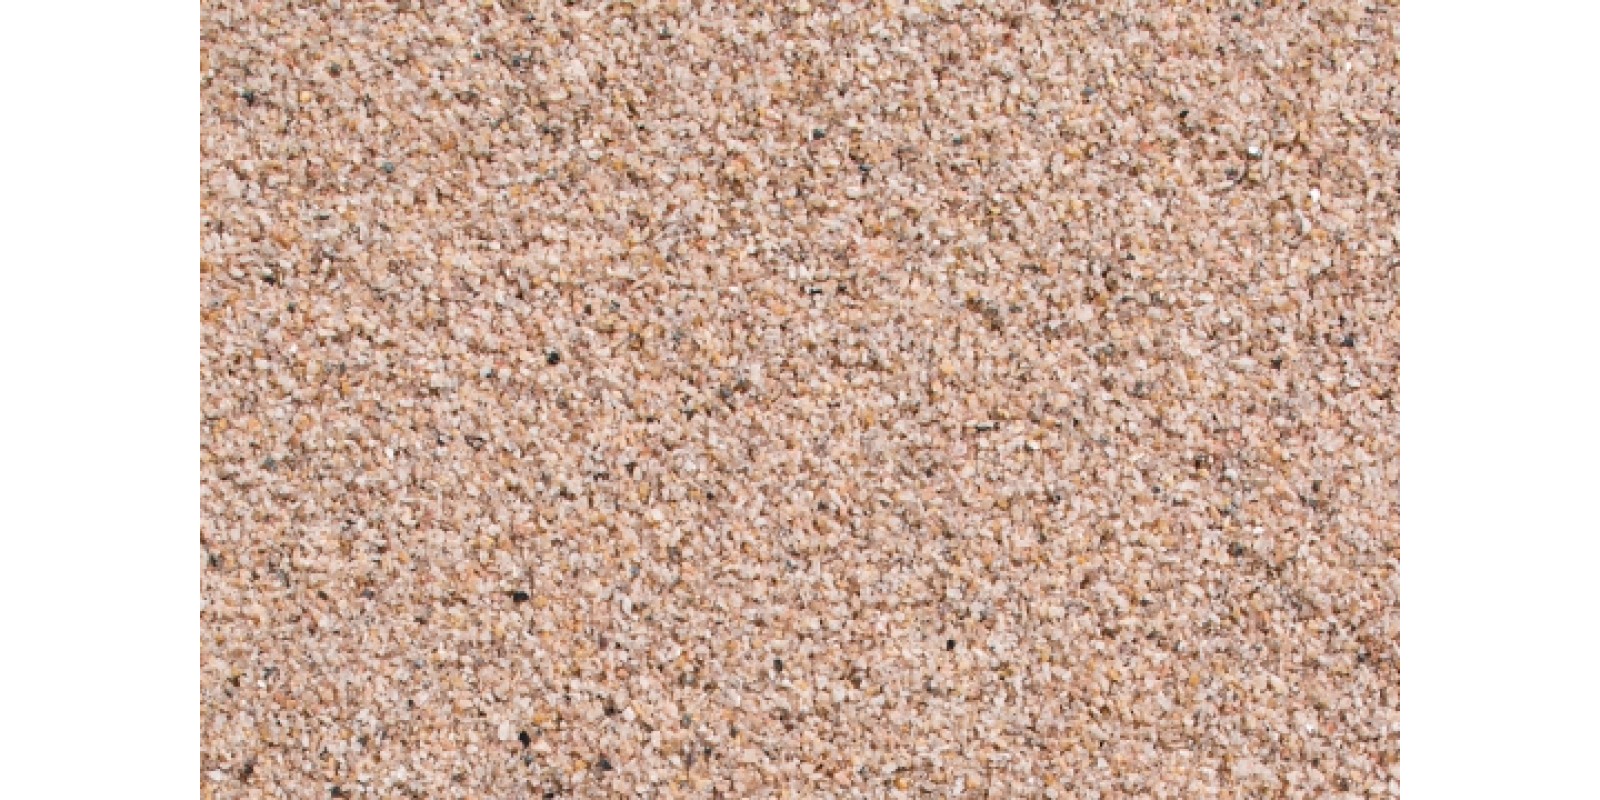 AU61830 Granite track ballast beige-brown H0